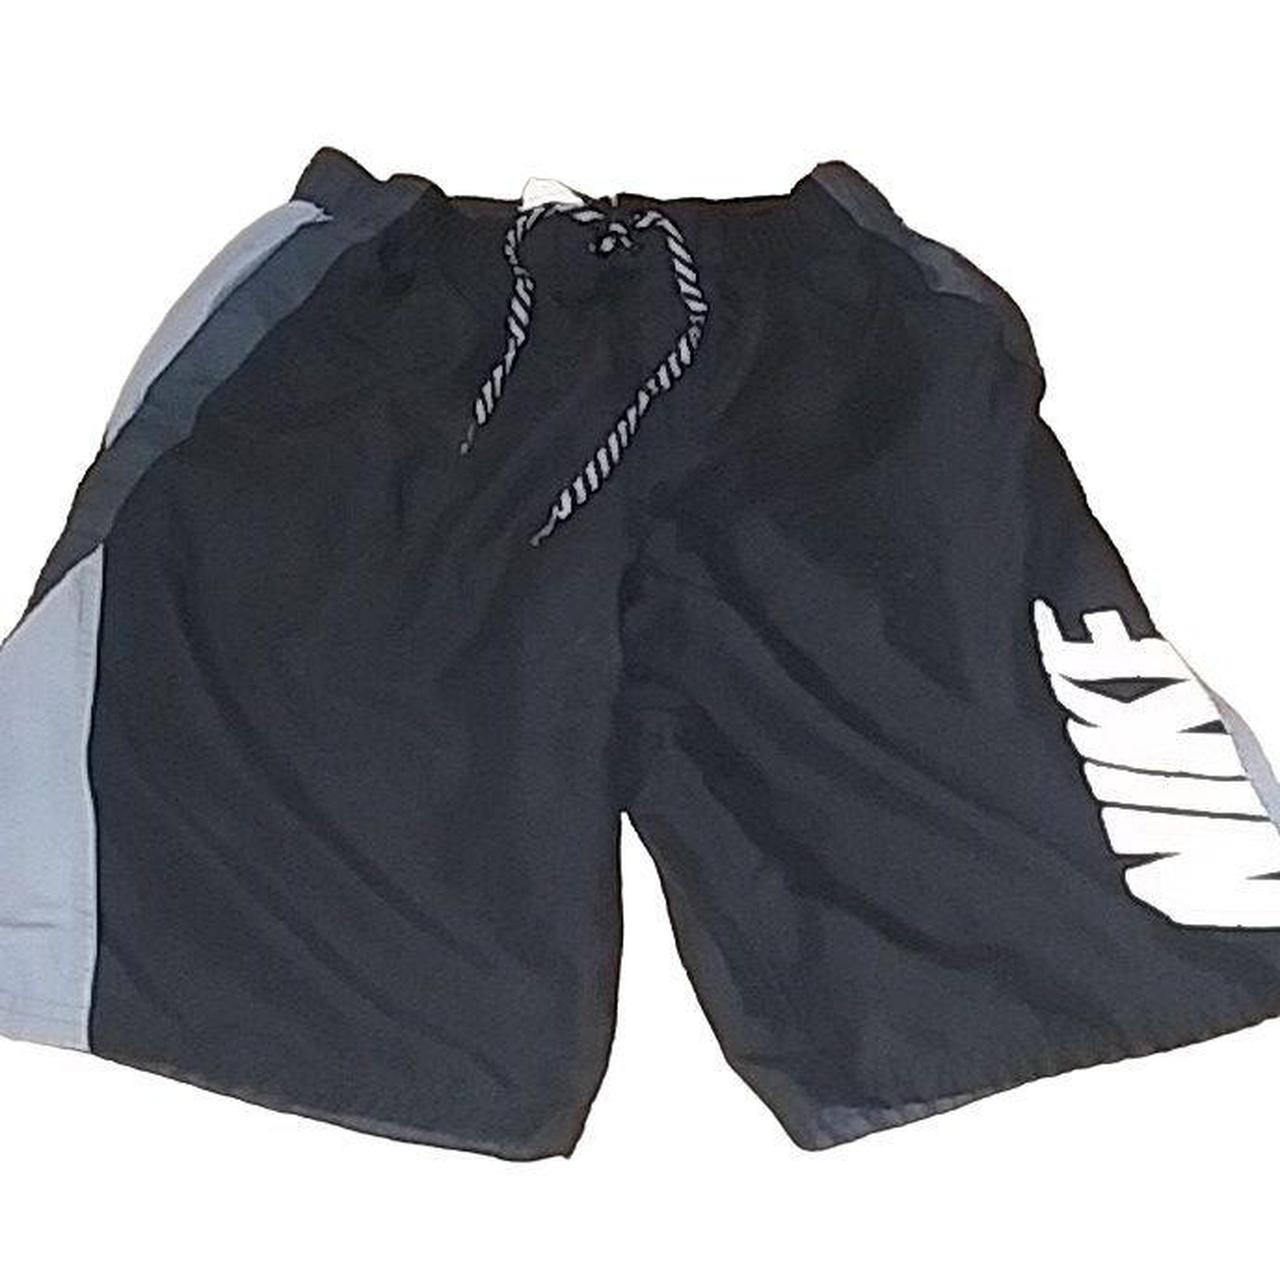 Nike Men's Black Swimsuit-one-piece